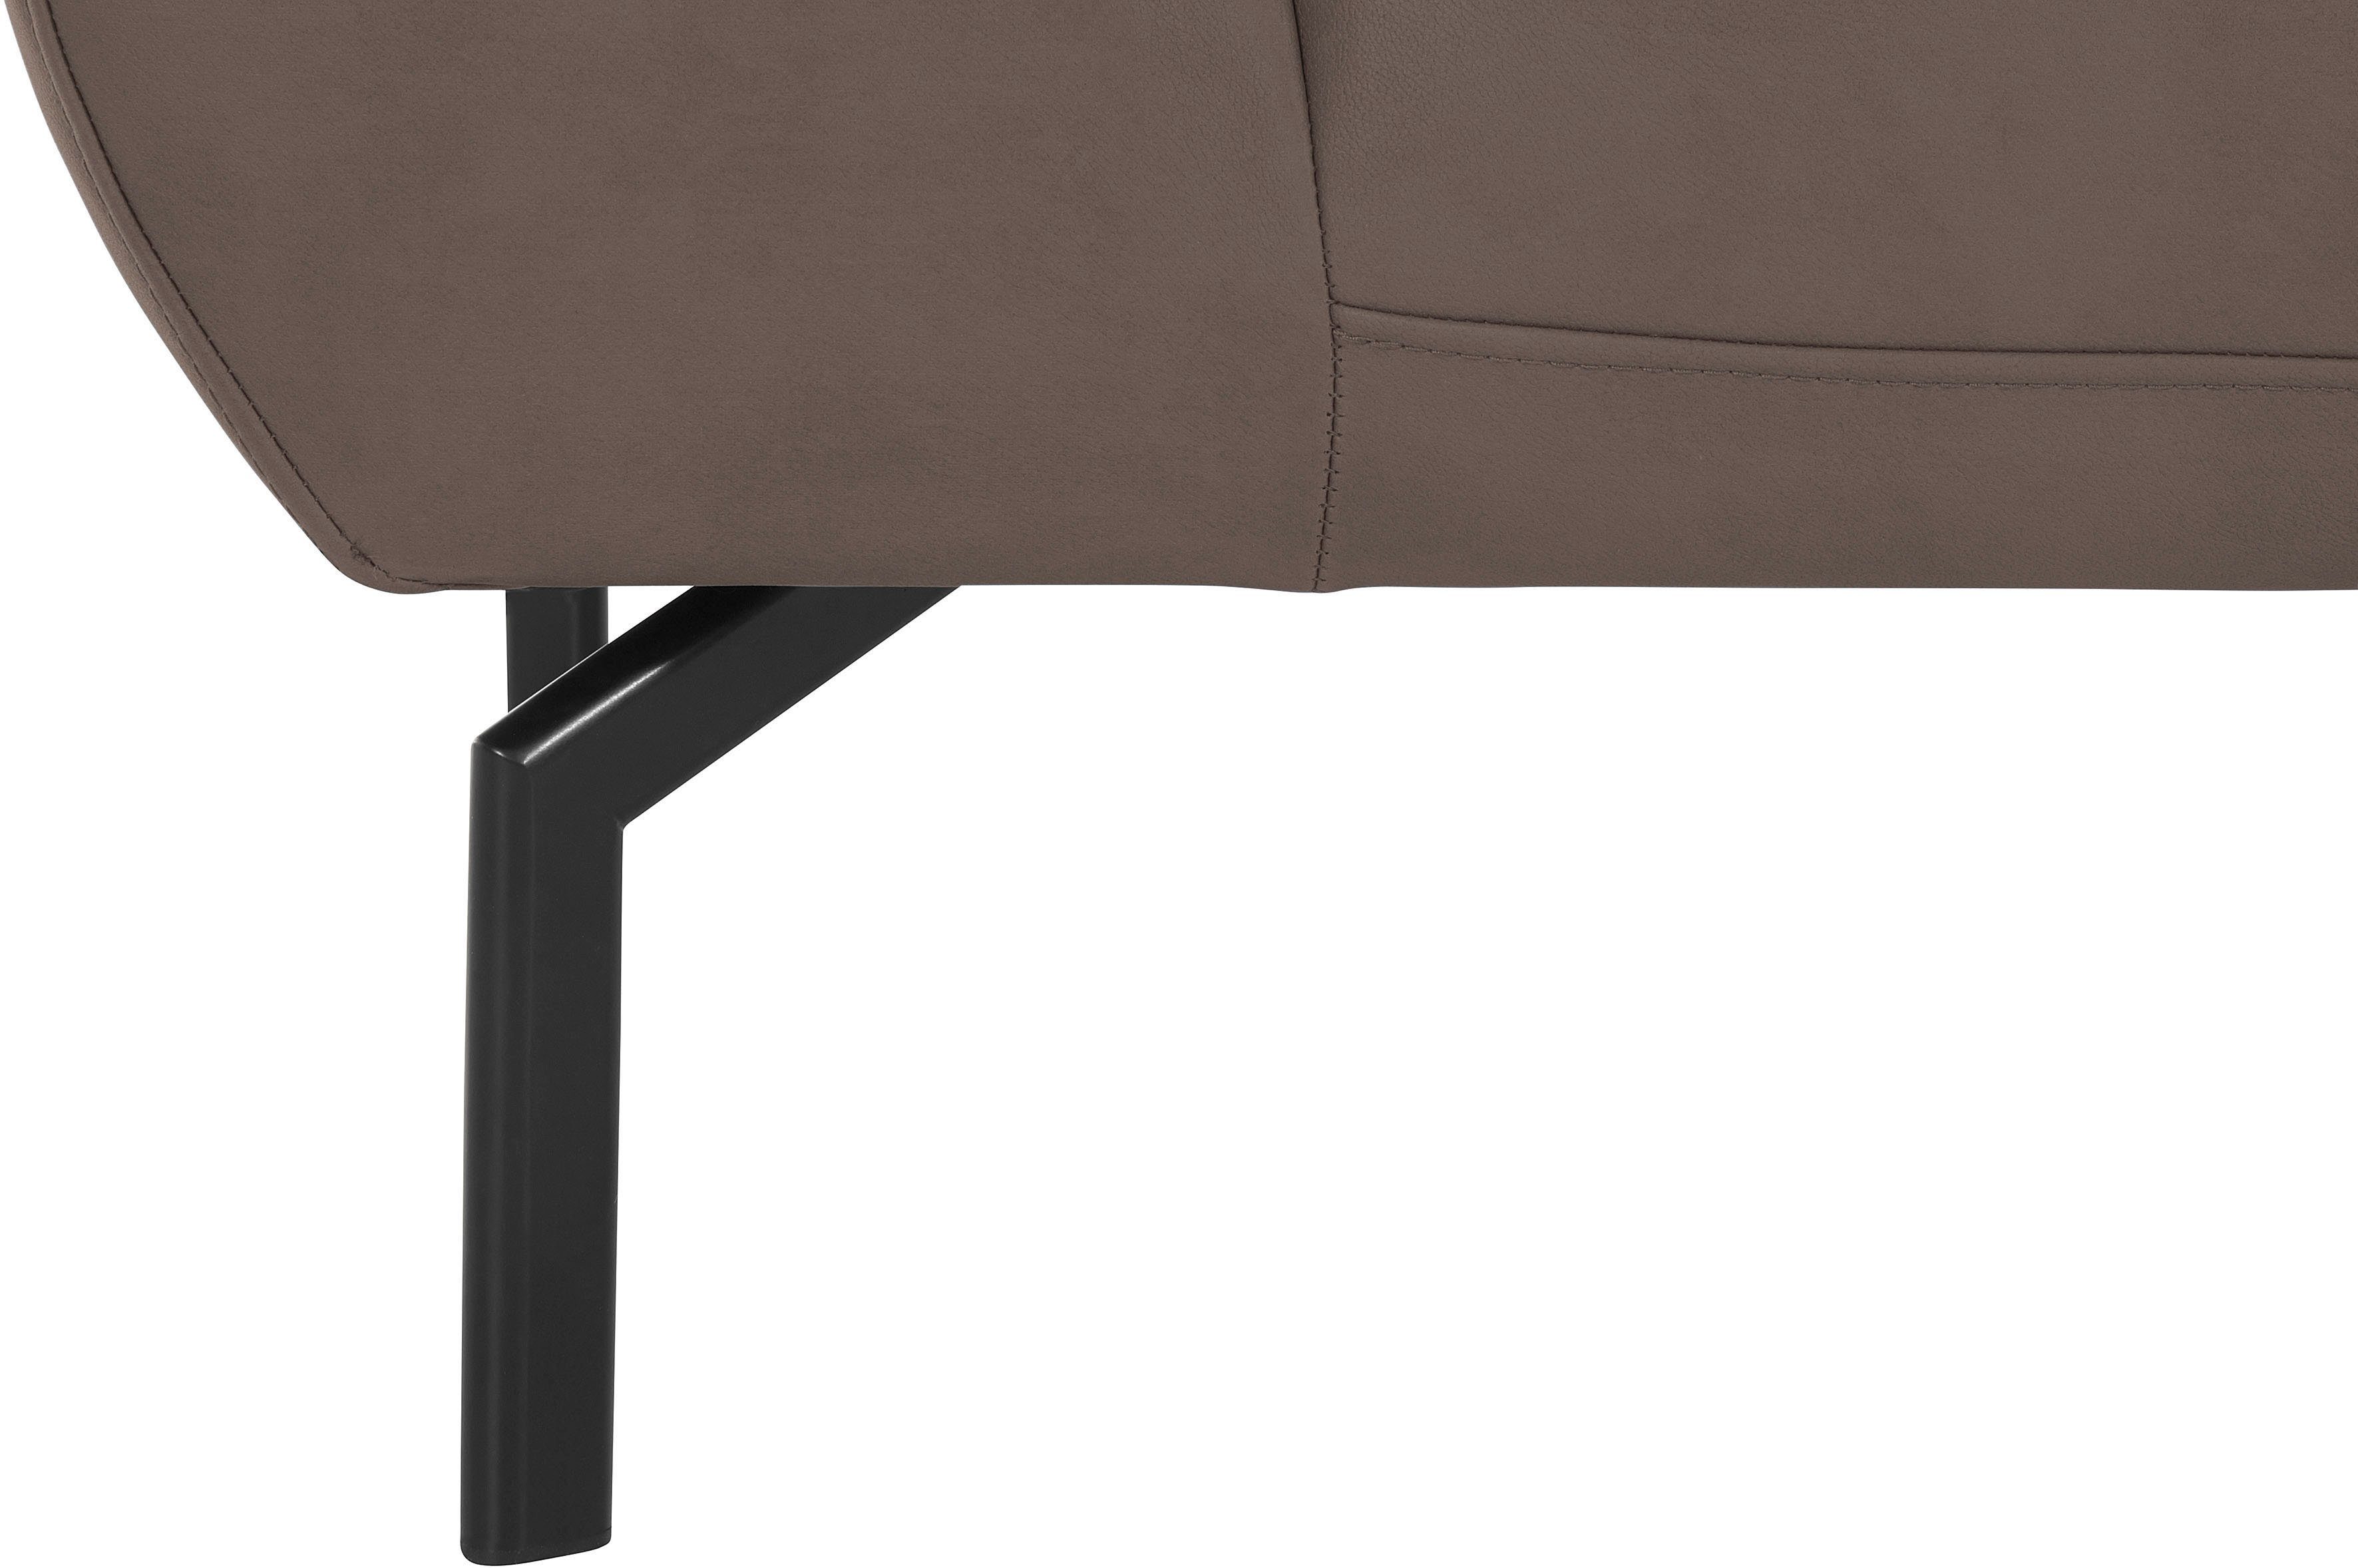 Places of Style Sessel Lederoptik mit Rückenverstellung, Luxus-Microfaser in Trapino wahlweise Luxus